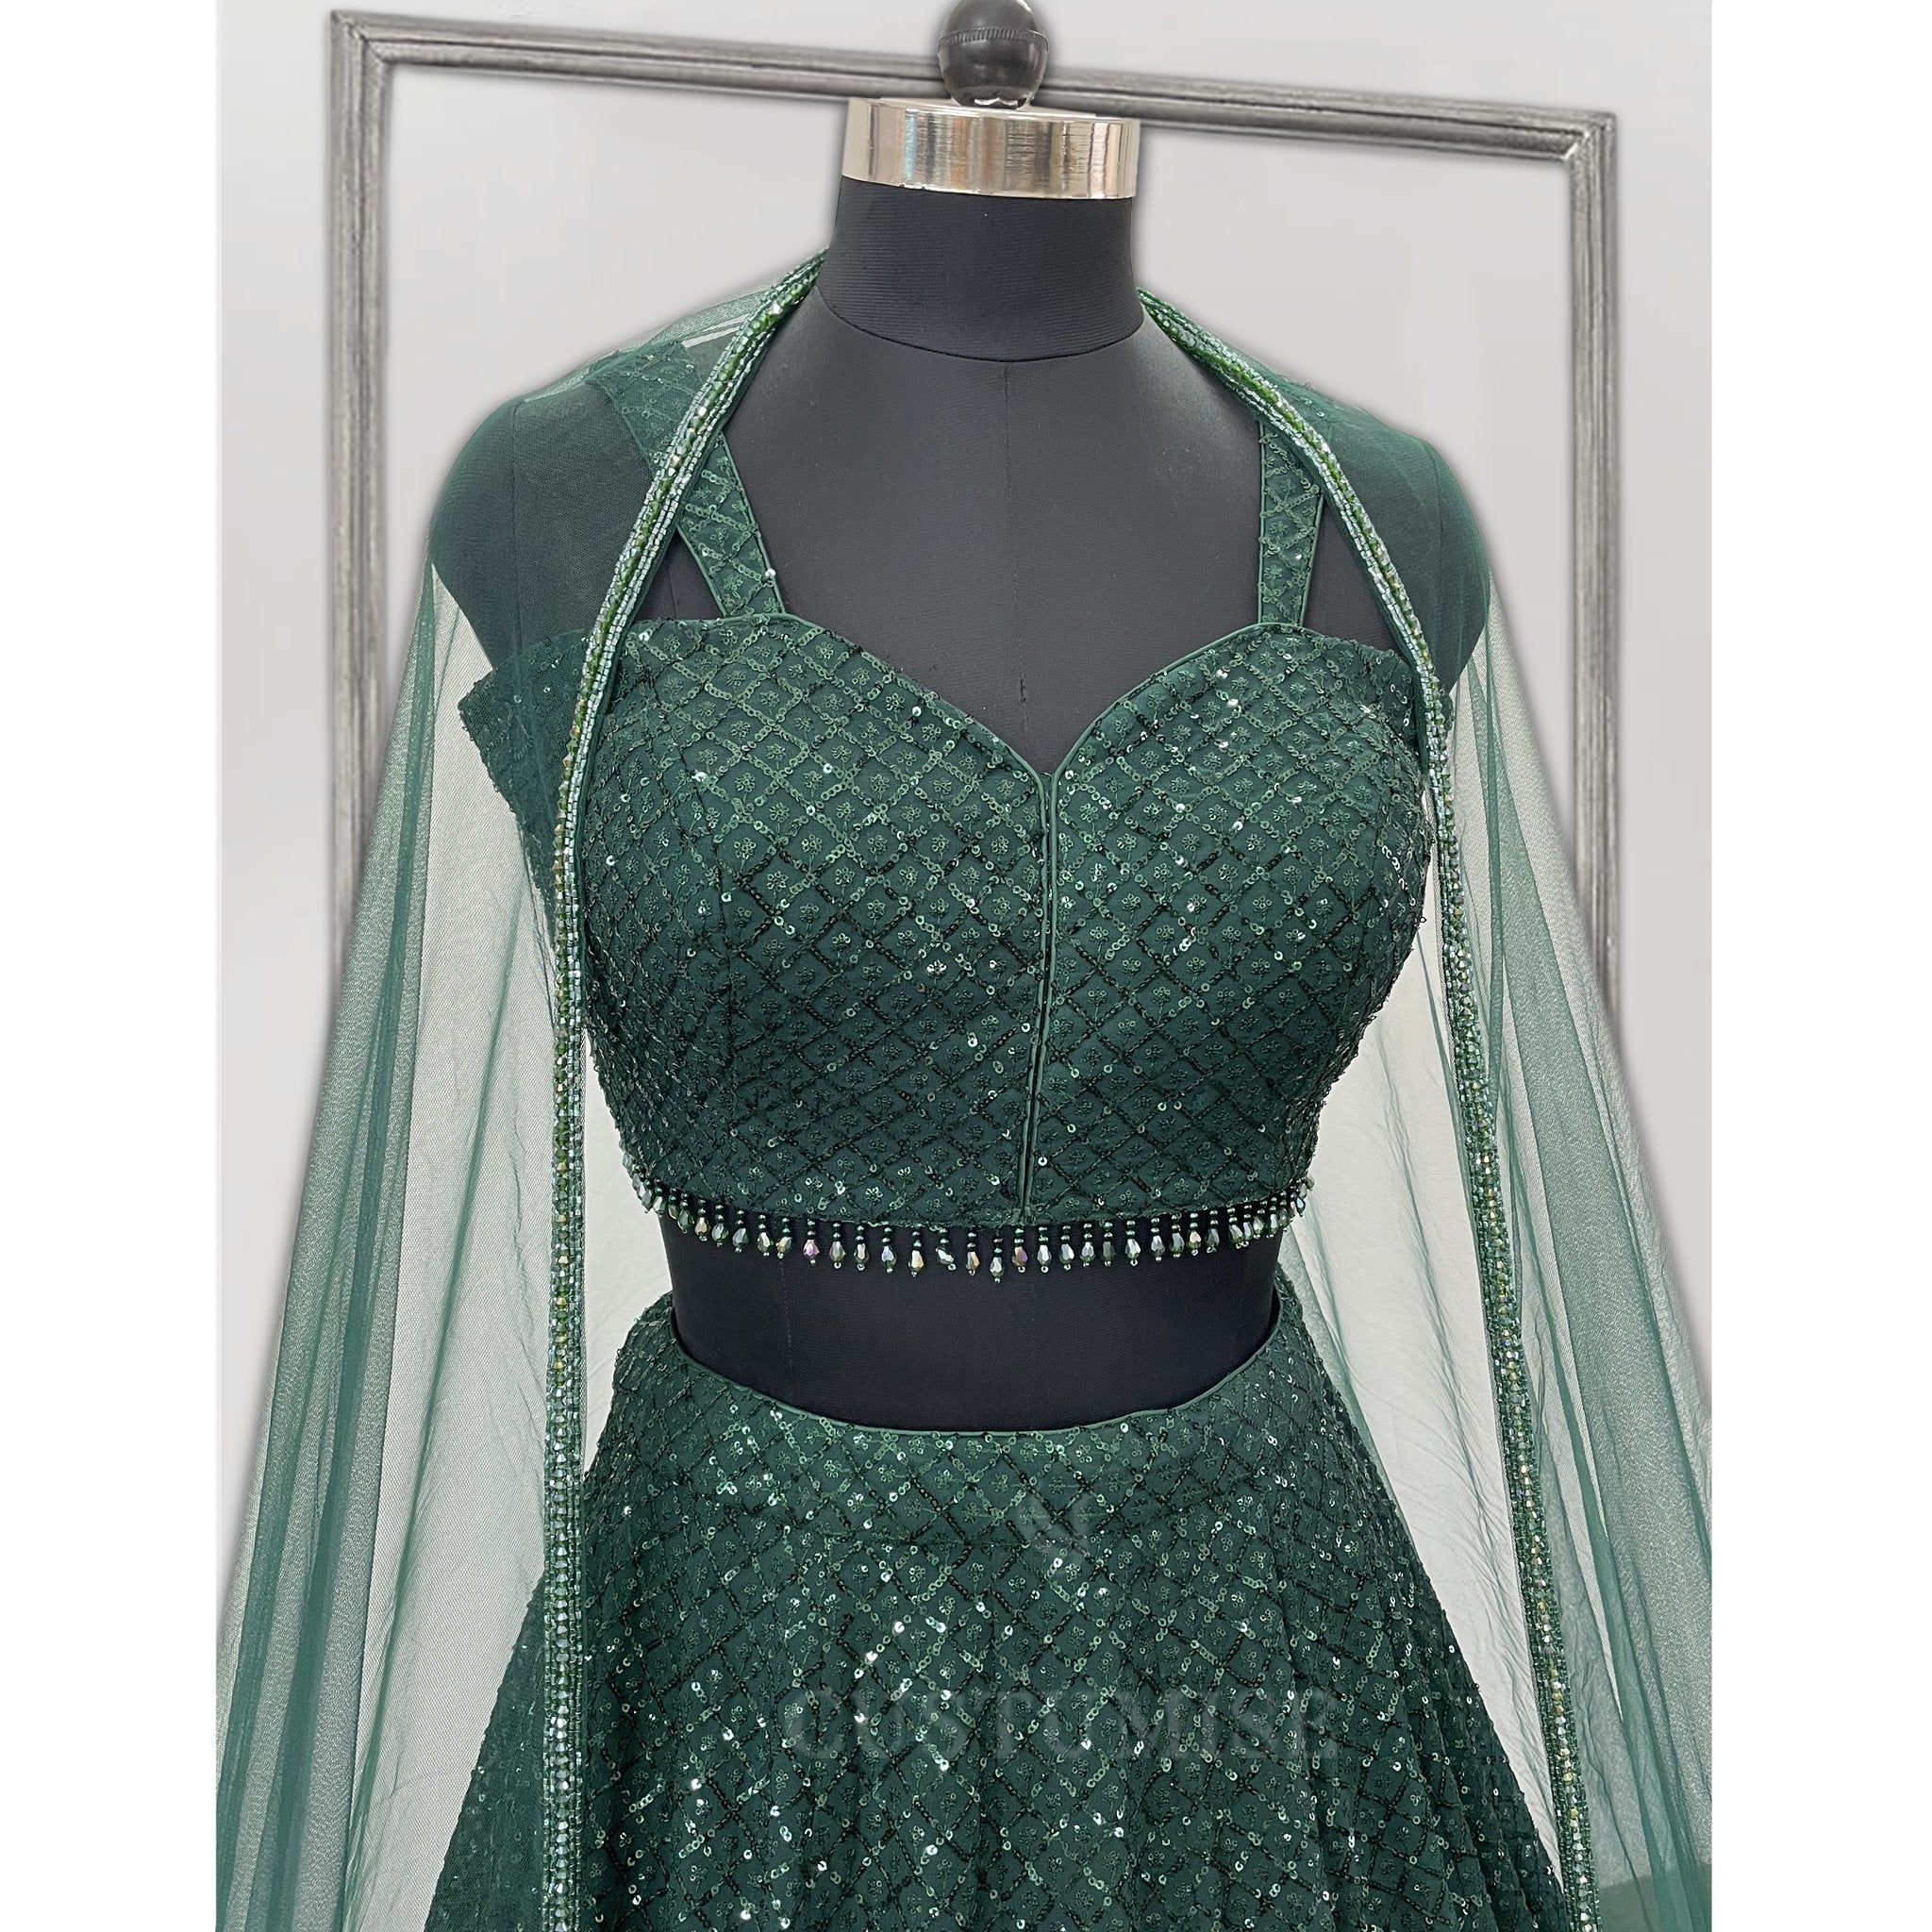 Emerald Green Sequence Cutdana Lehenga Set - Indian Designer Bridal Wedding Outfit